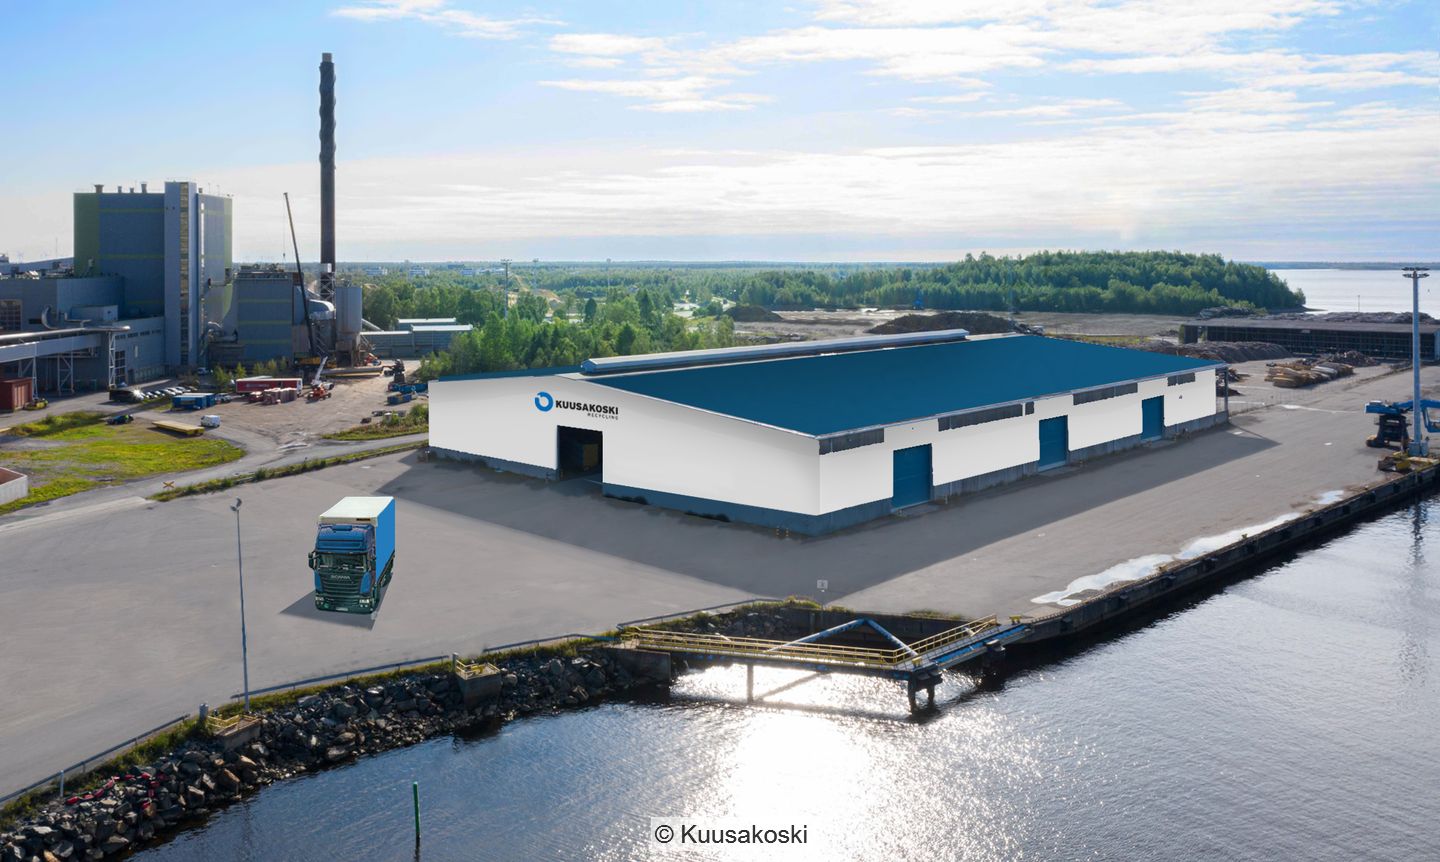 Artist's impression of Kuusakoski's ferrous scrap recycling plant to be built in Veitsiluoto near Kemi, Finland